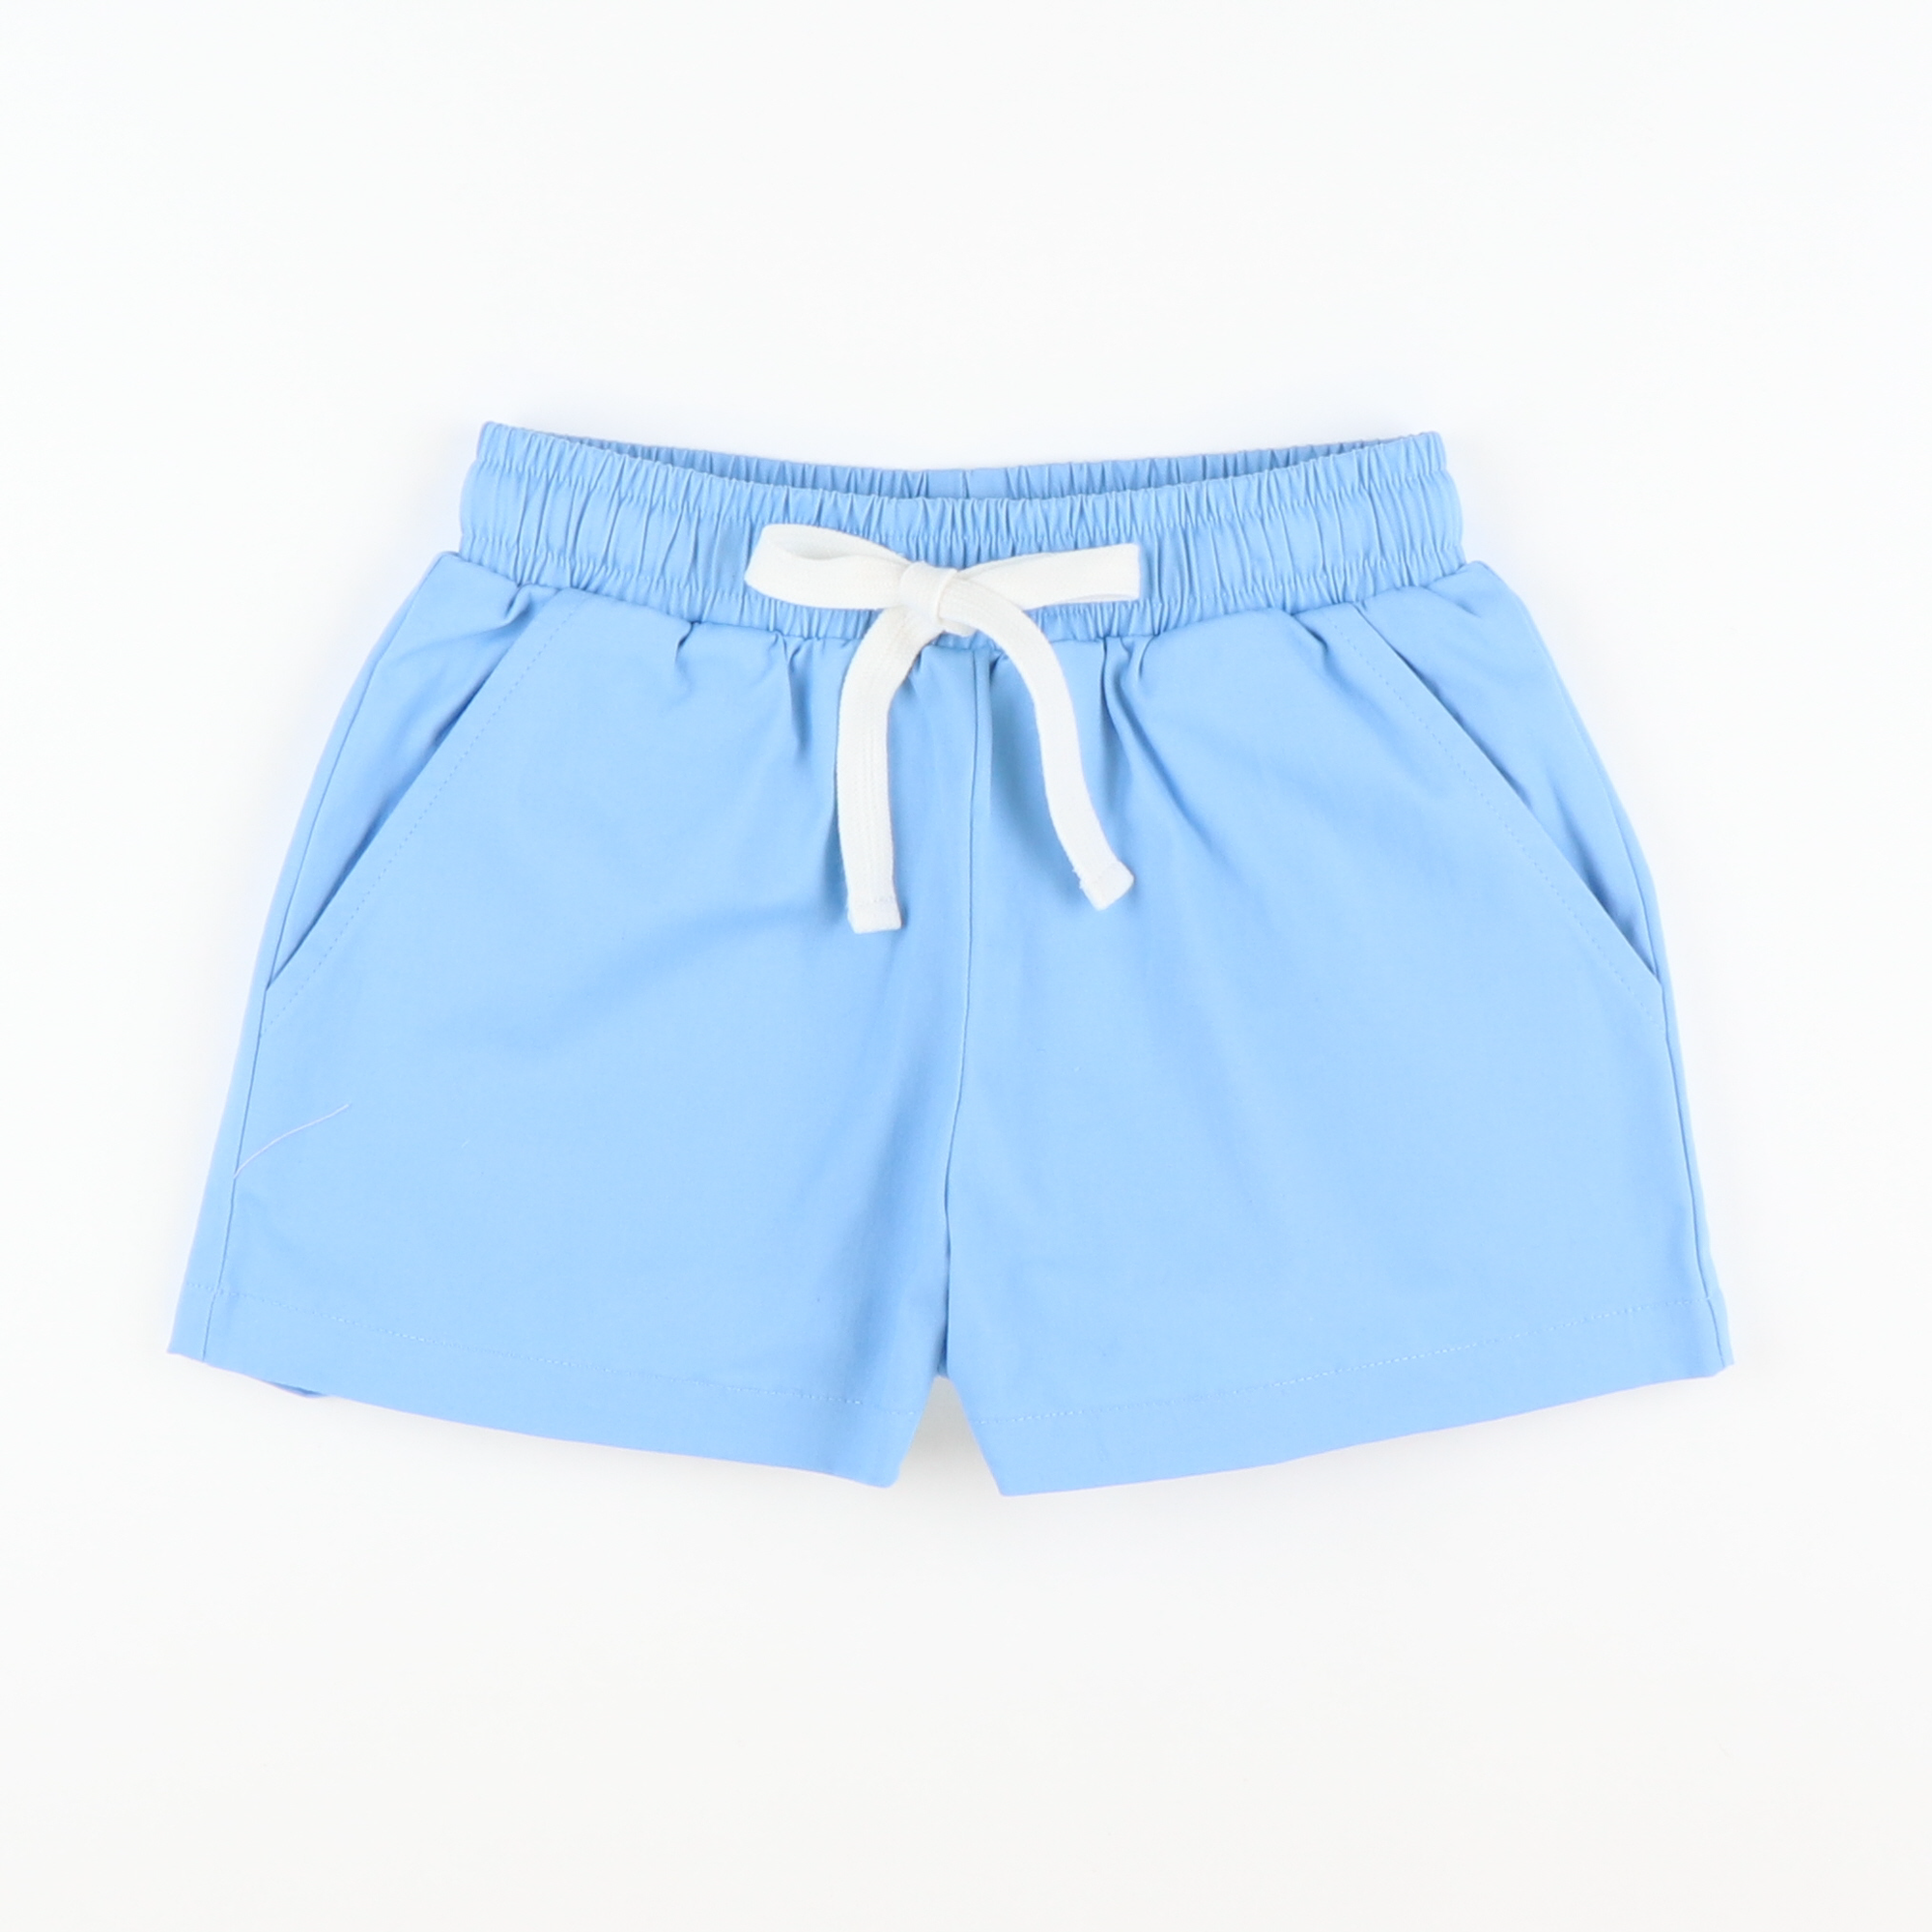 Boys Signature Twill Shorts - Caribbean Blue